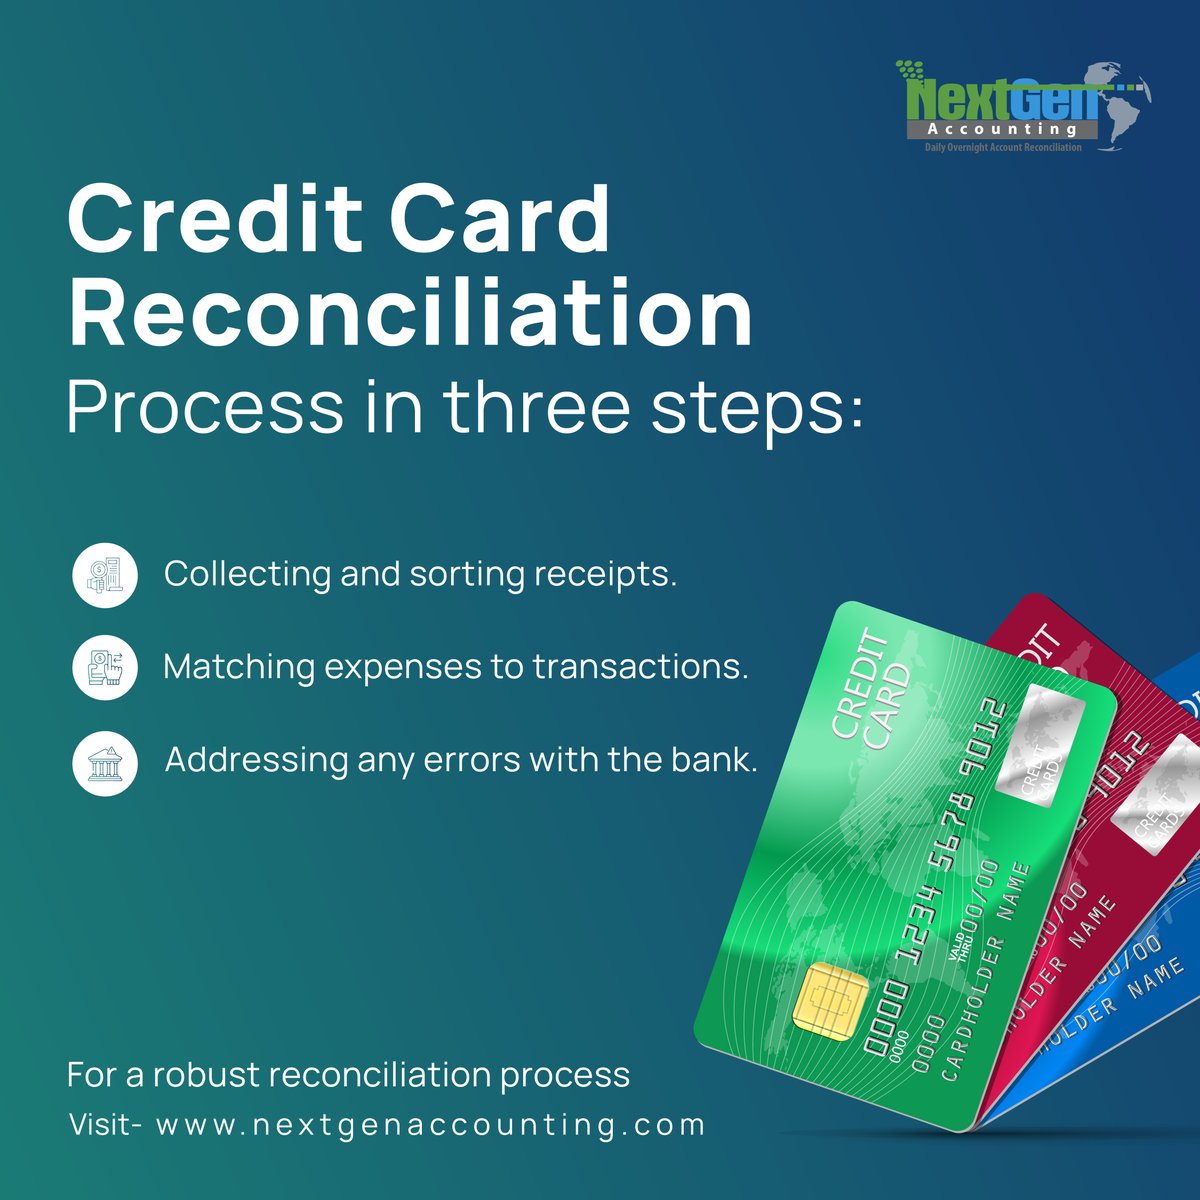 Credit card reconciliation: simplified.
#Nextgen #creditcard #creditcardreconciliation #reconciliation #reconciliationbacklog #finance #accounting #accountancy #accounts